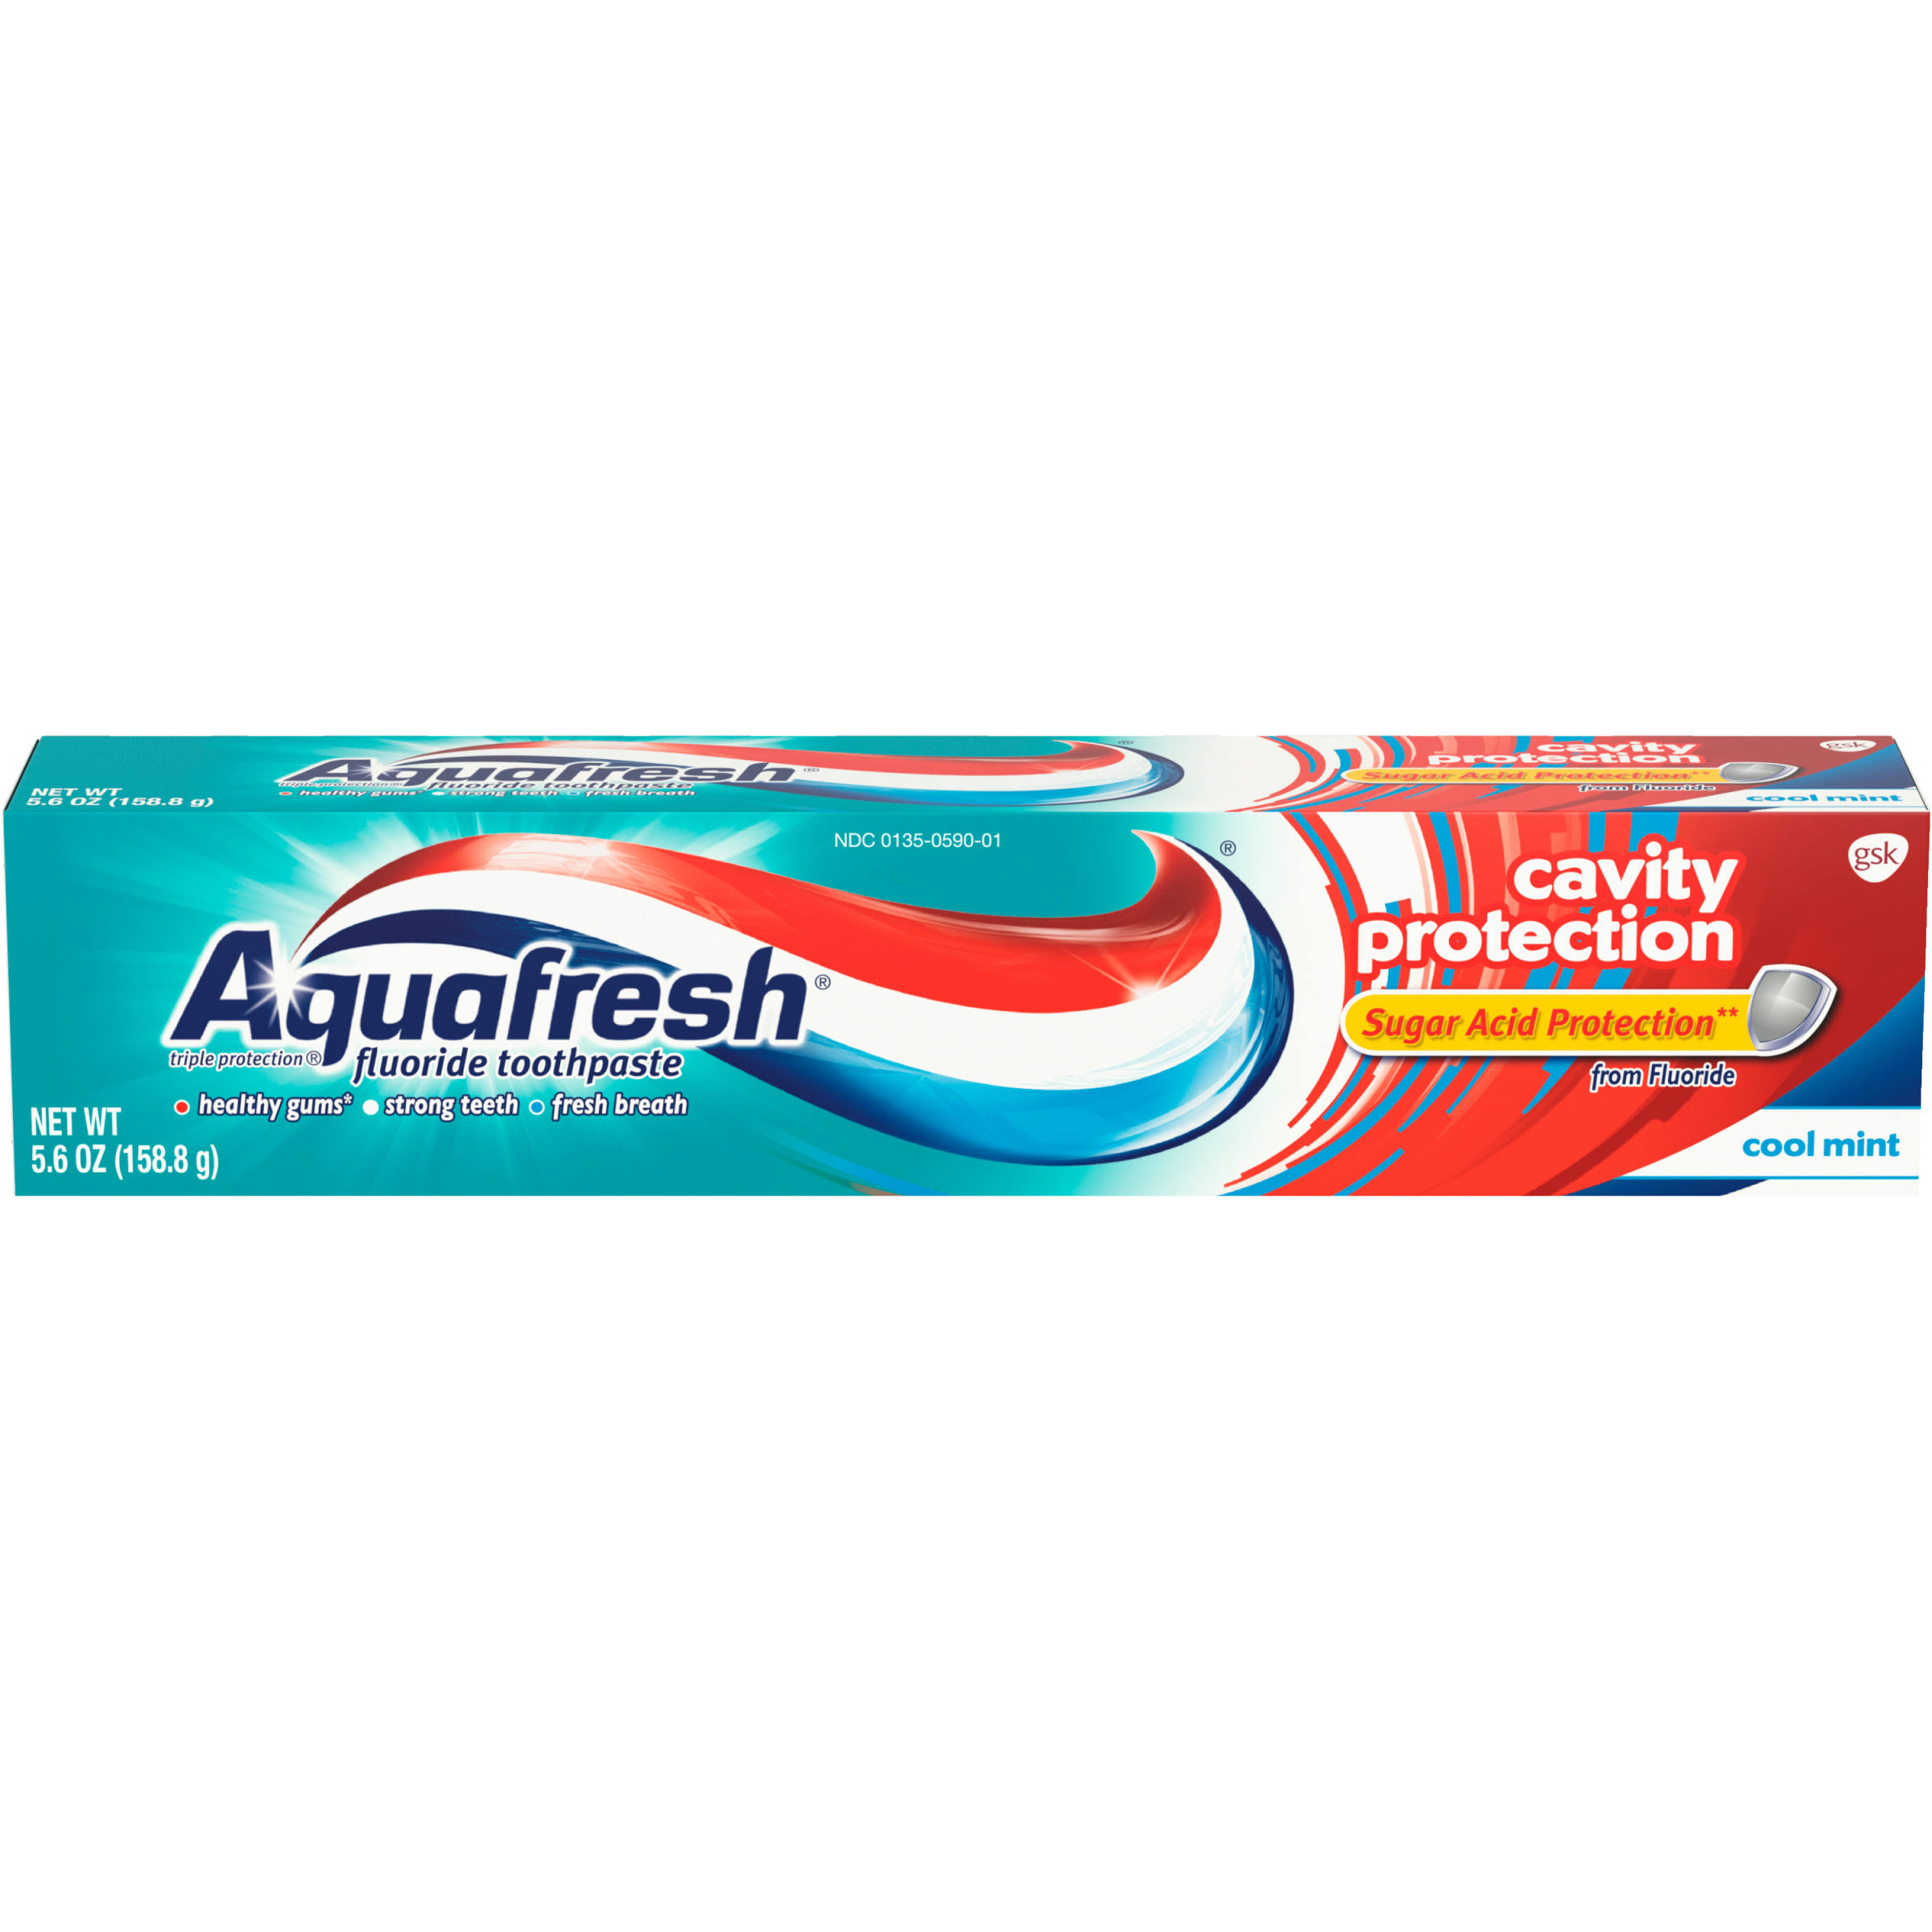 Aquafresh Cavity Protection Toothpaste - Cool Mint, 158.7g